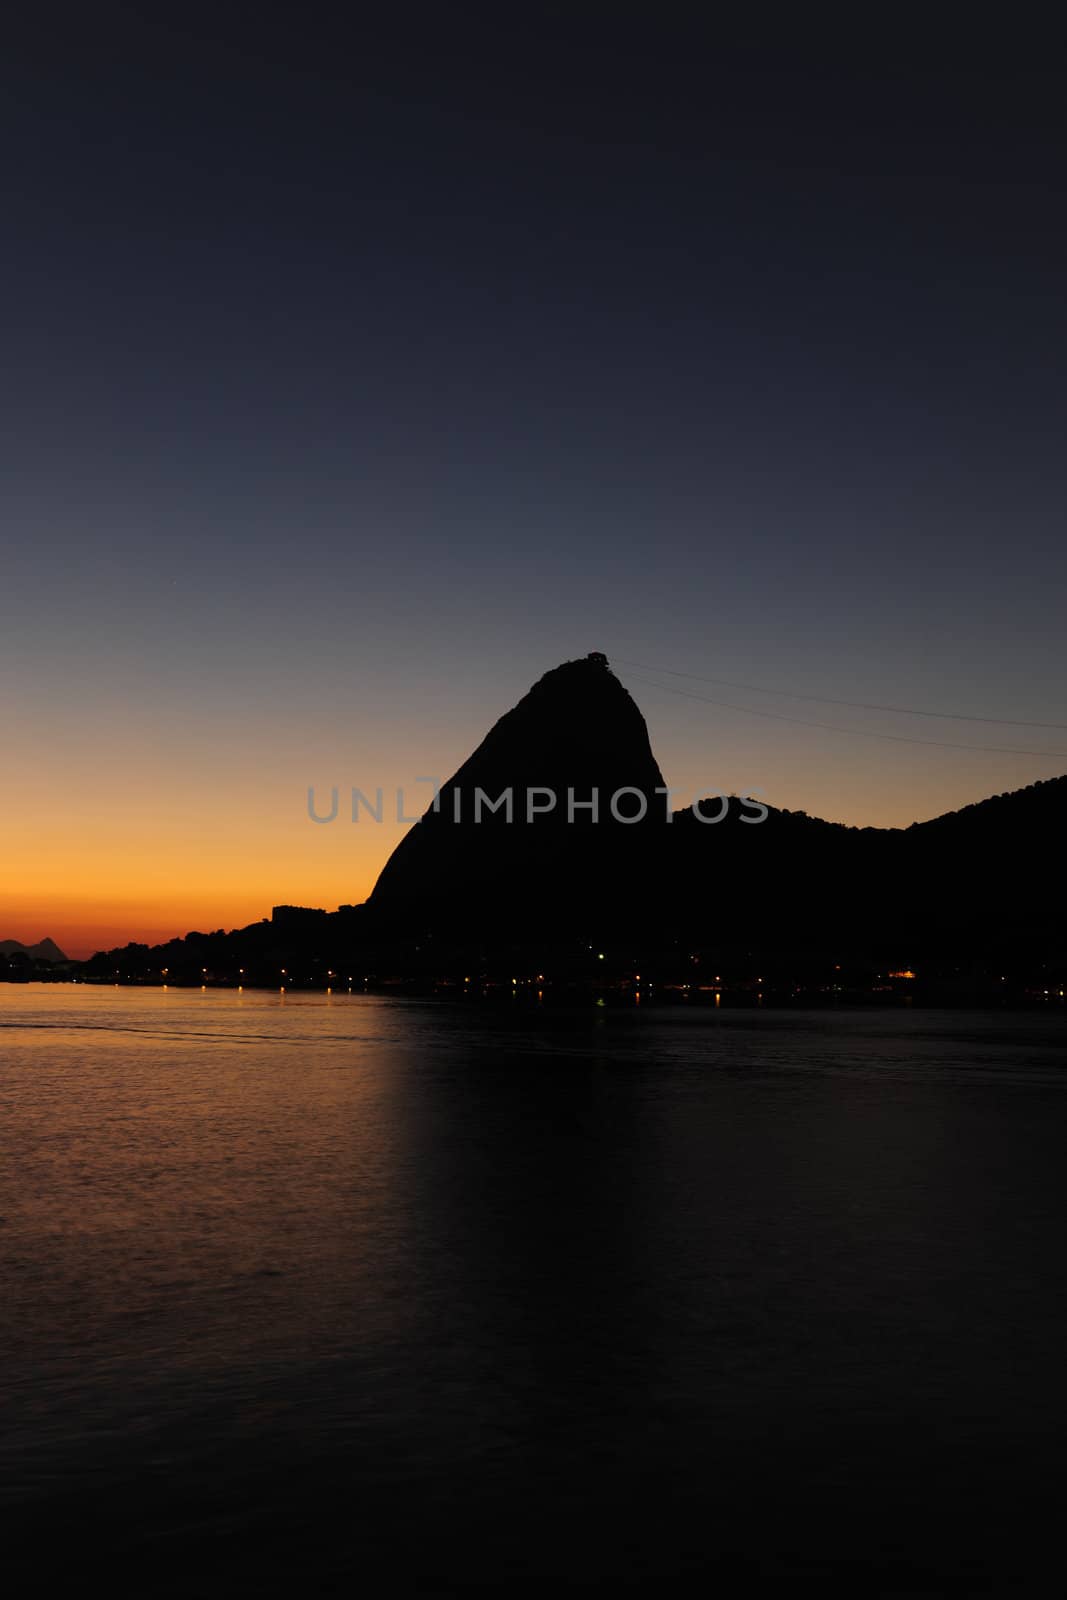 Sunrise in Rio de Janeiro, Sugarloaf Mountain by mangostock